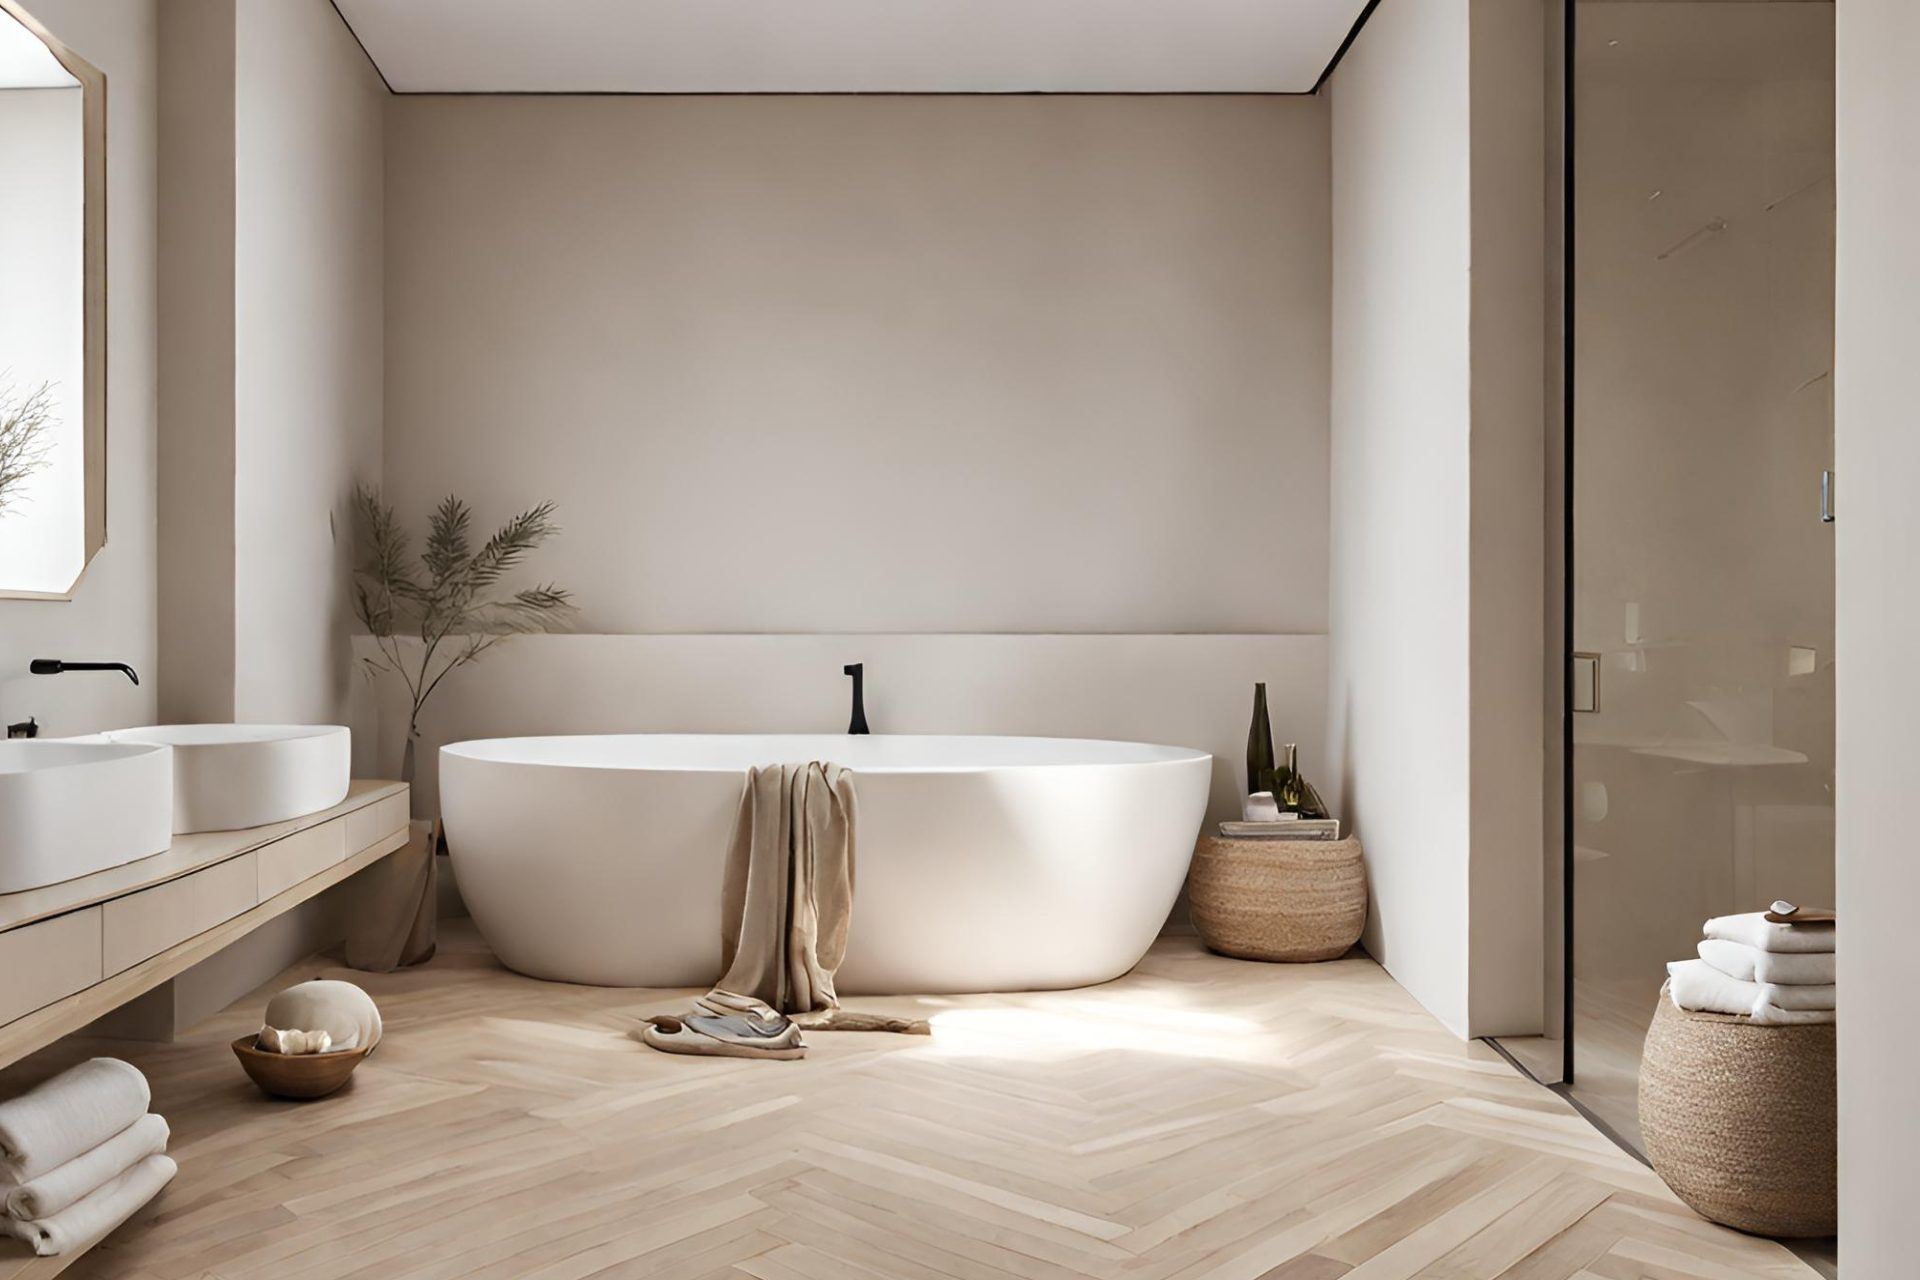 Tegels in een Japandi stijl badkamer